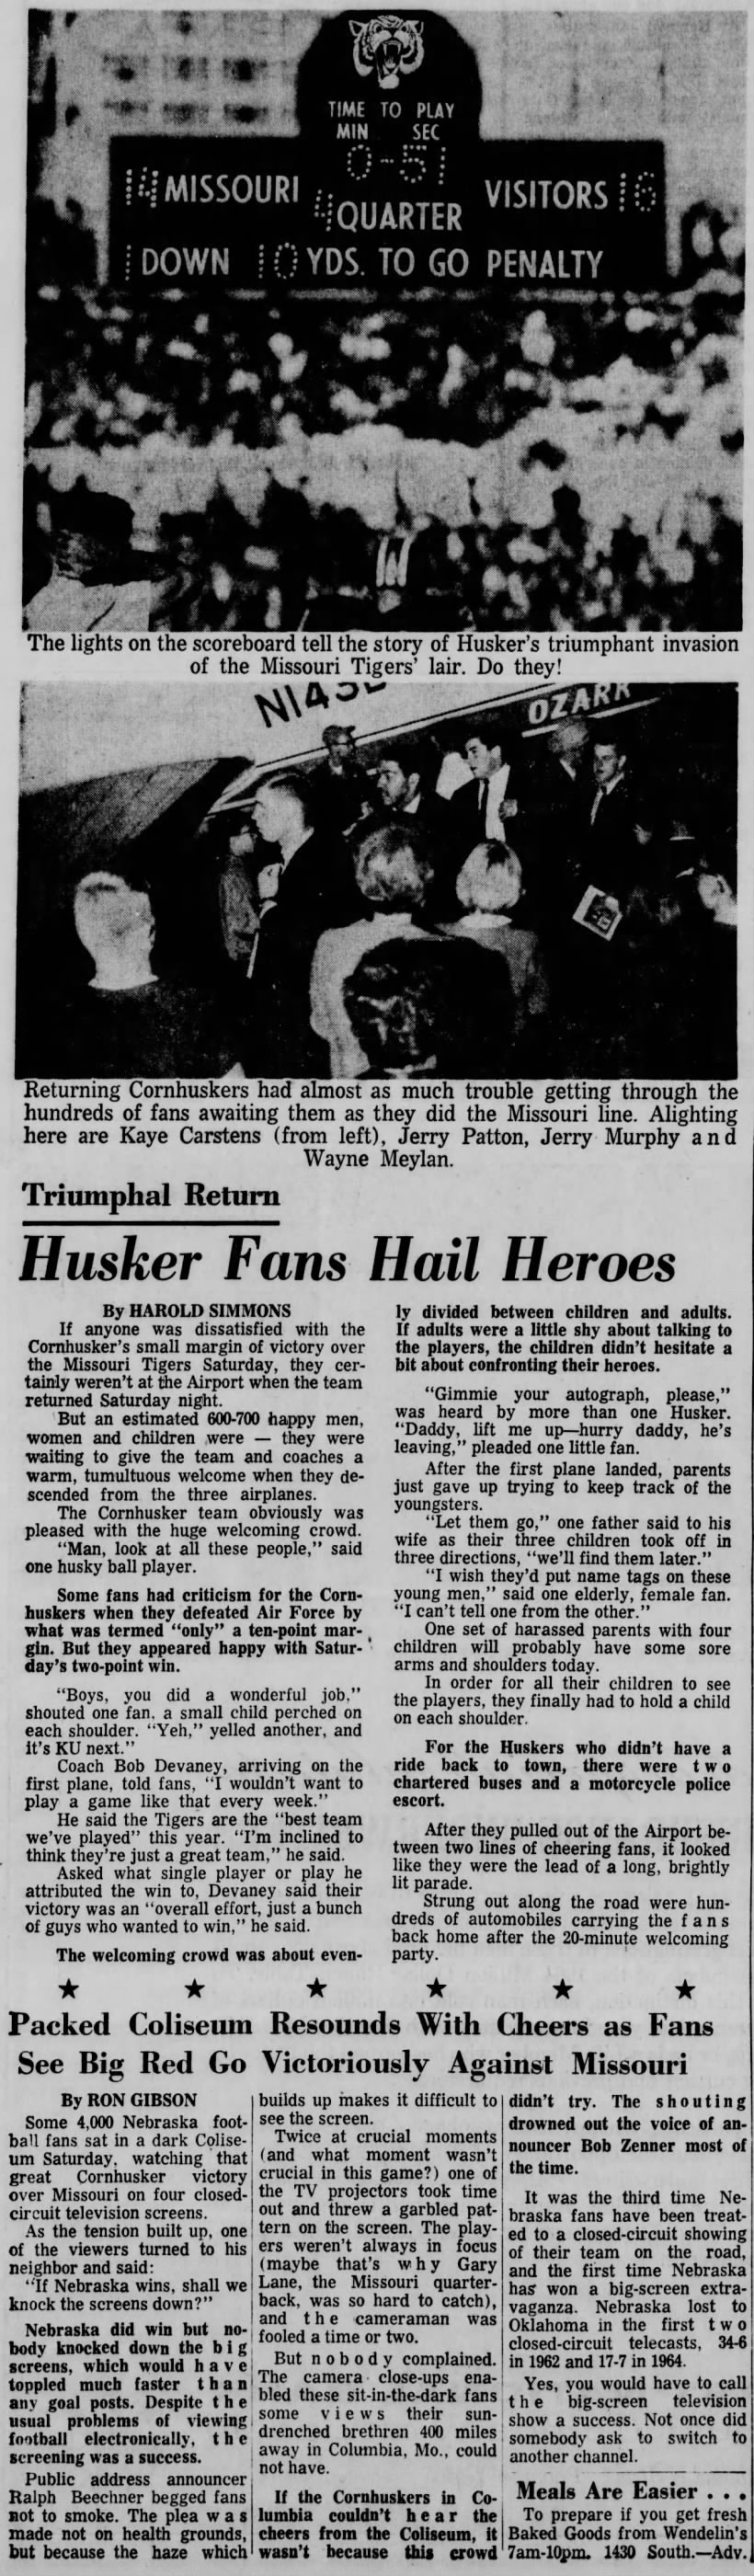 1965 Nebraska-Missouri football, page one coverage